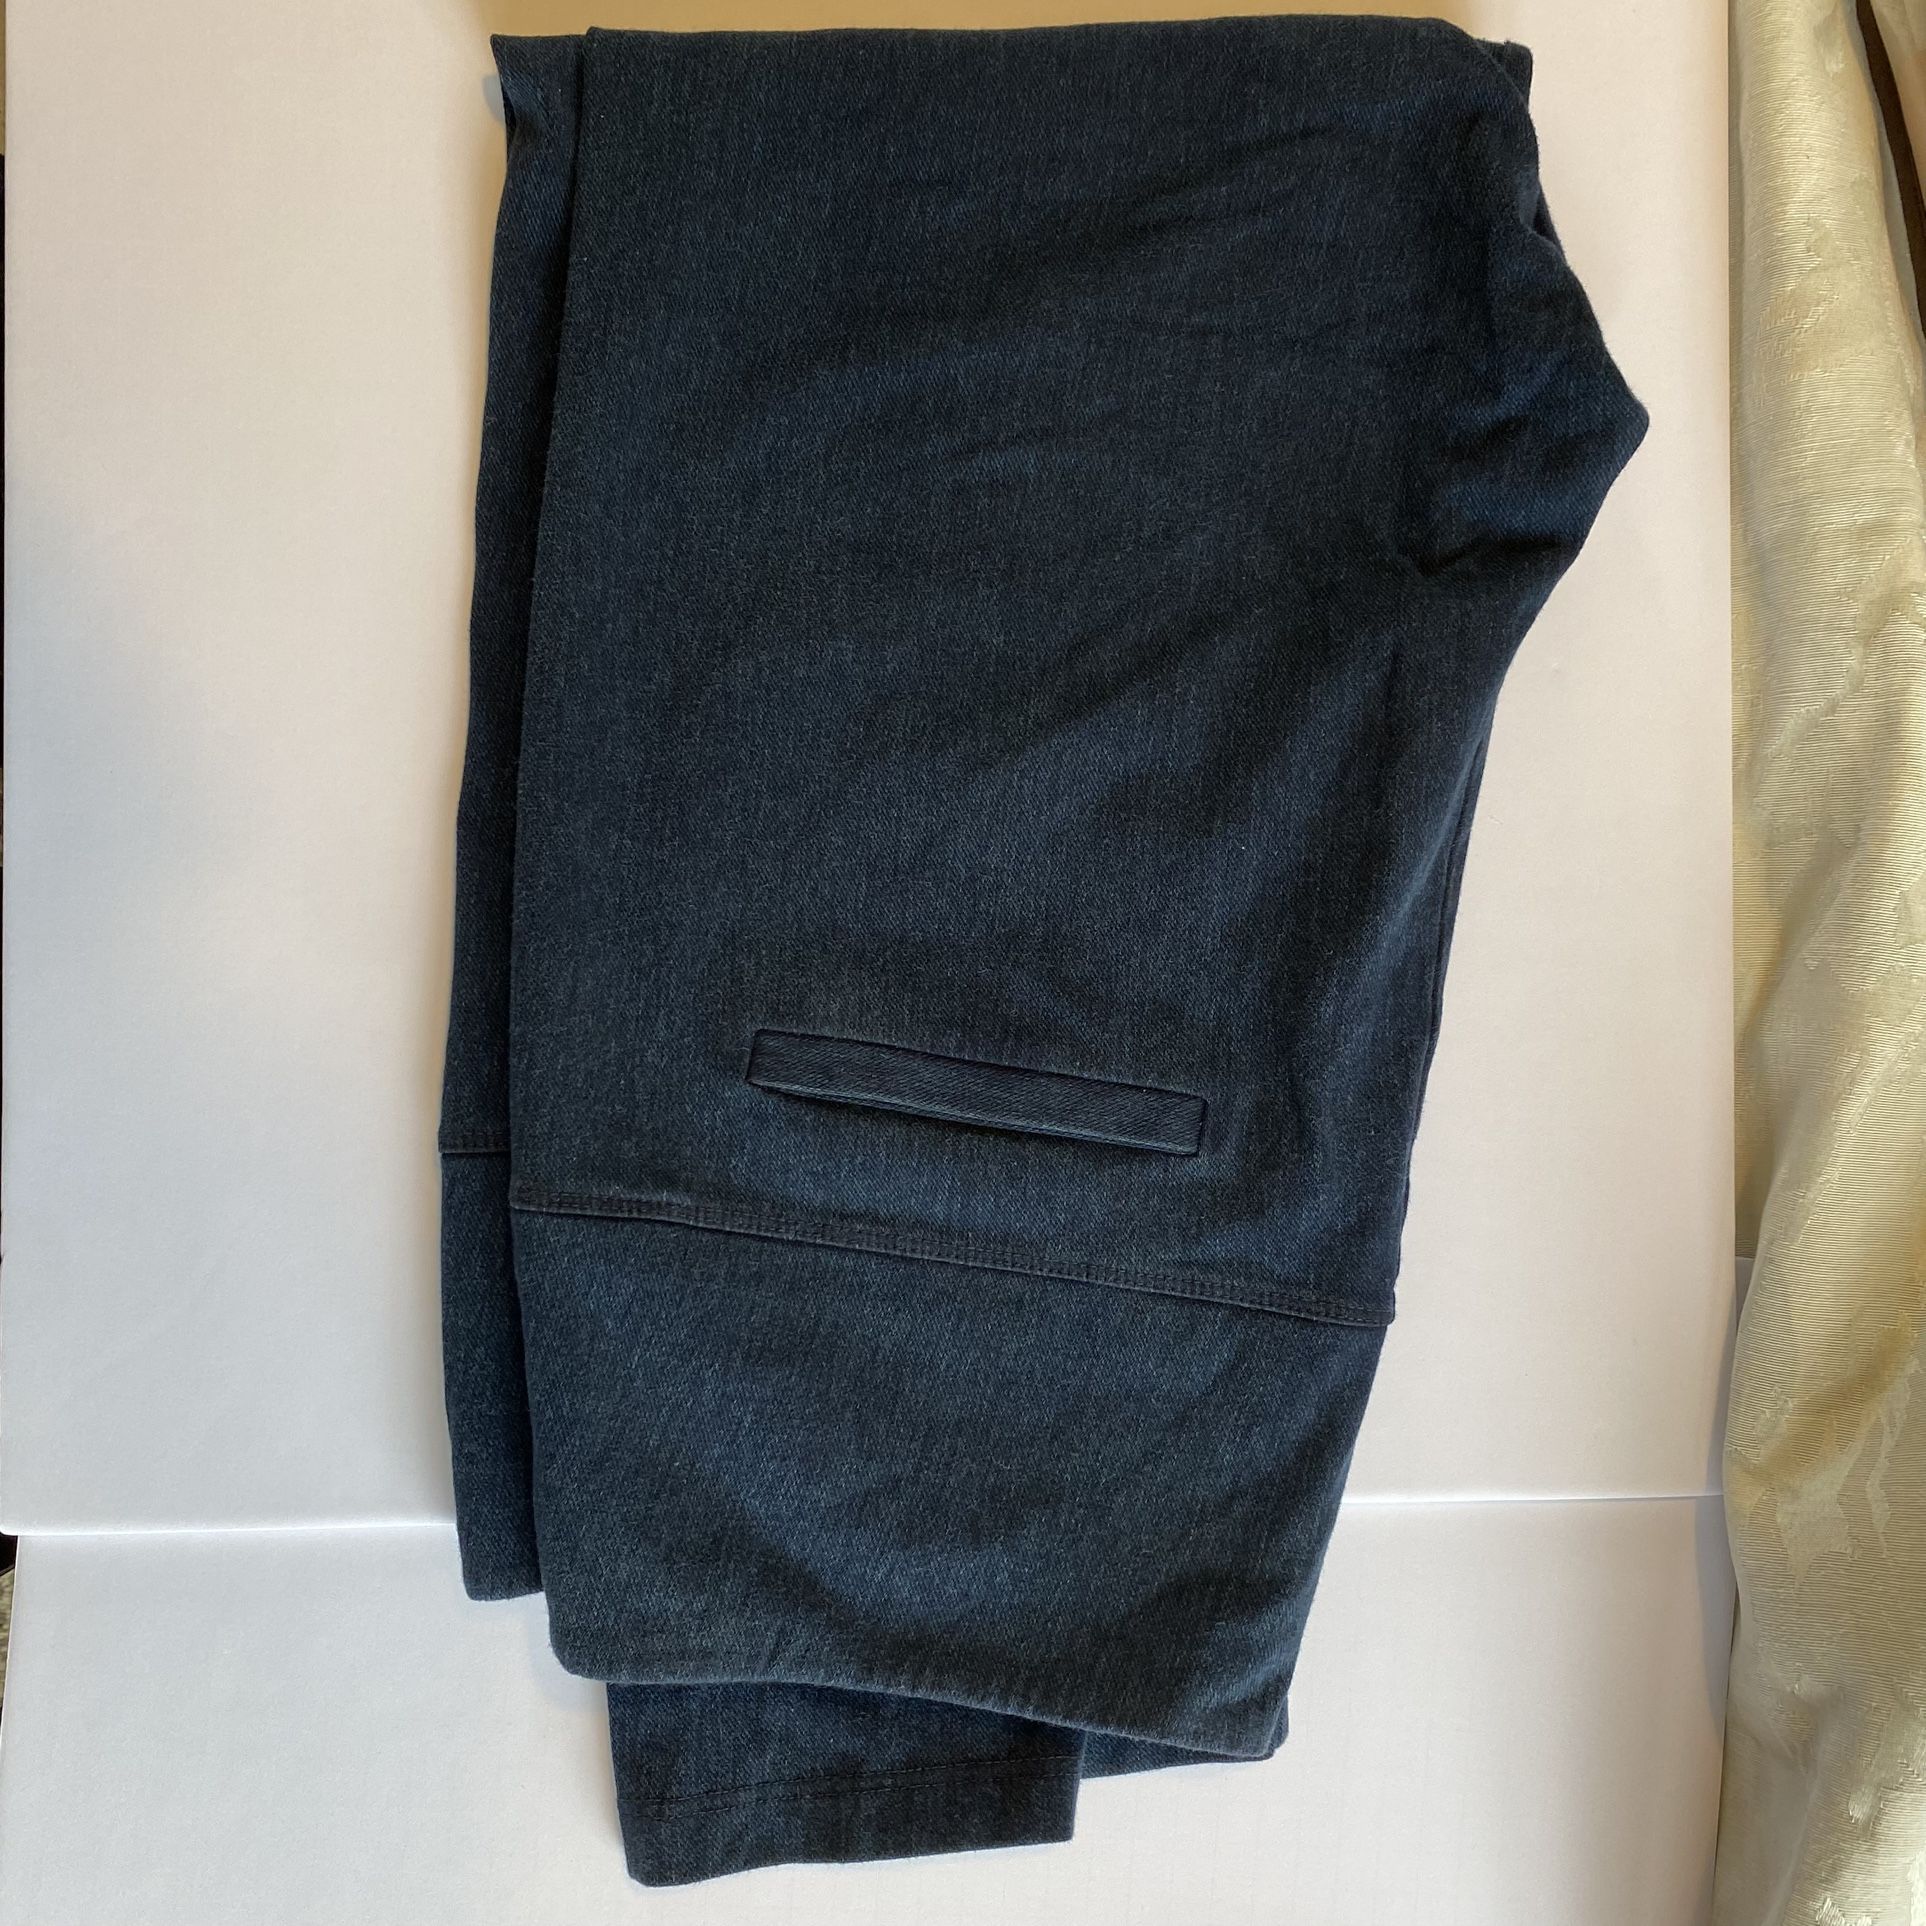 Women’s Size 2X stretchy jeans